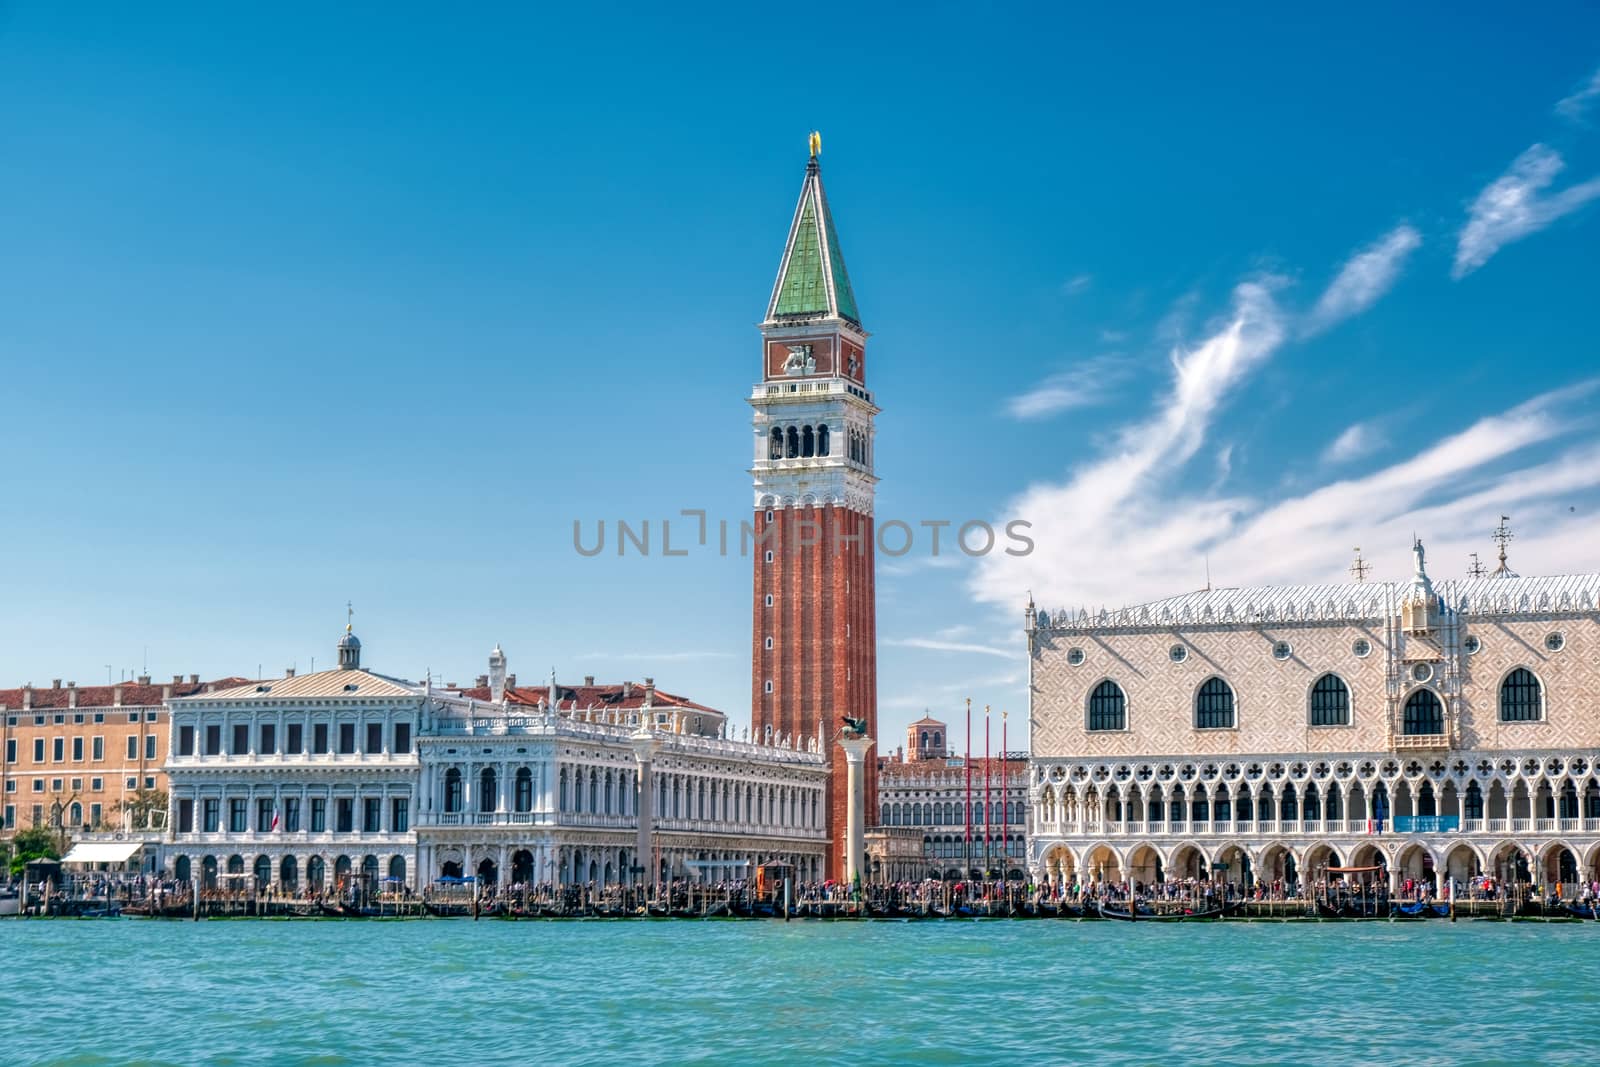 St Mark's Square in Venice, Italy, Piazza San Marco in Venezia by asafaric